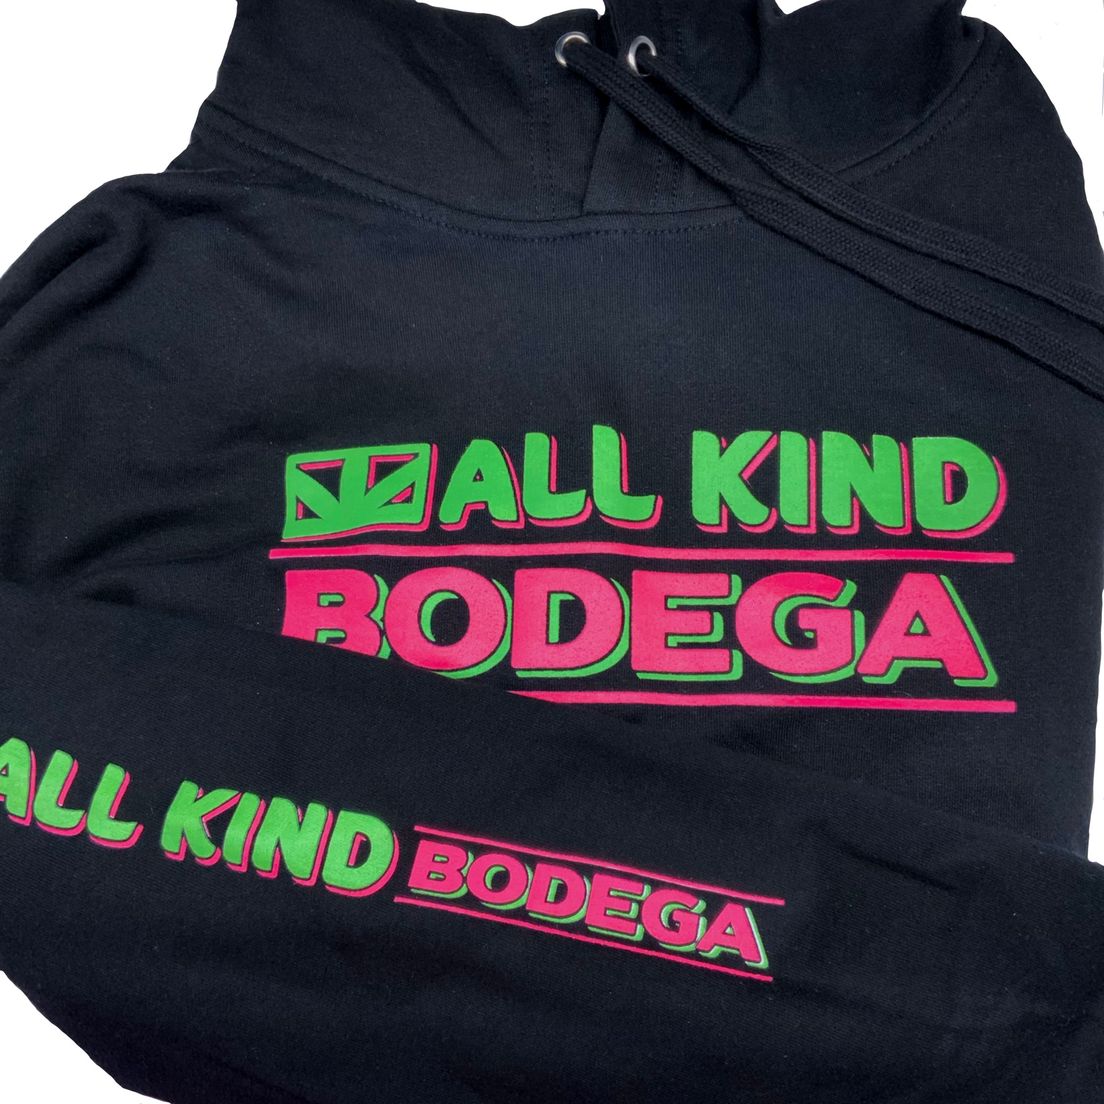 All Kind Bodega Hoodie (Black + Neon Print) XS